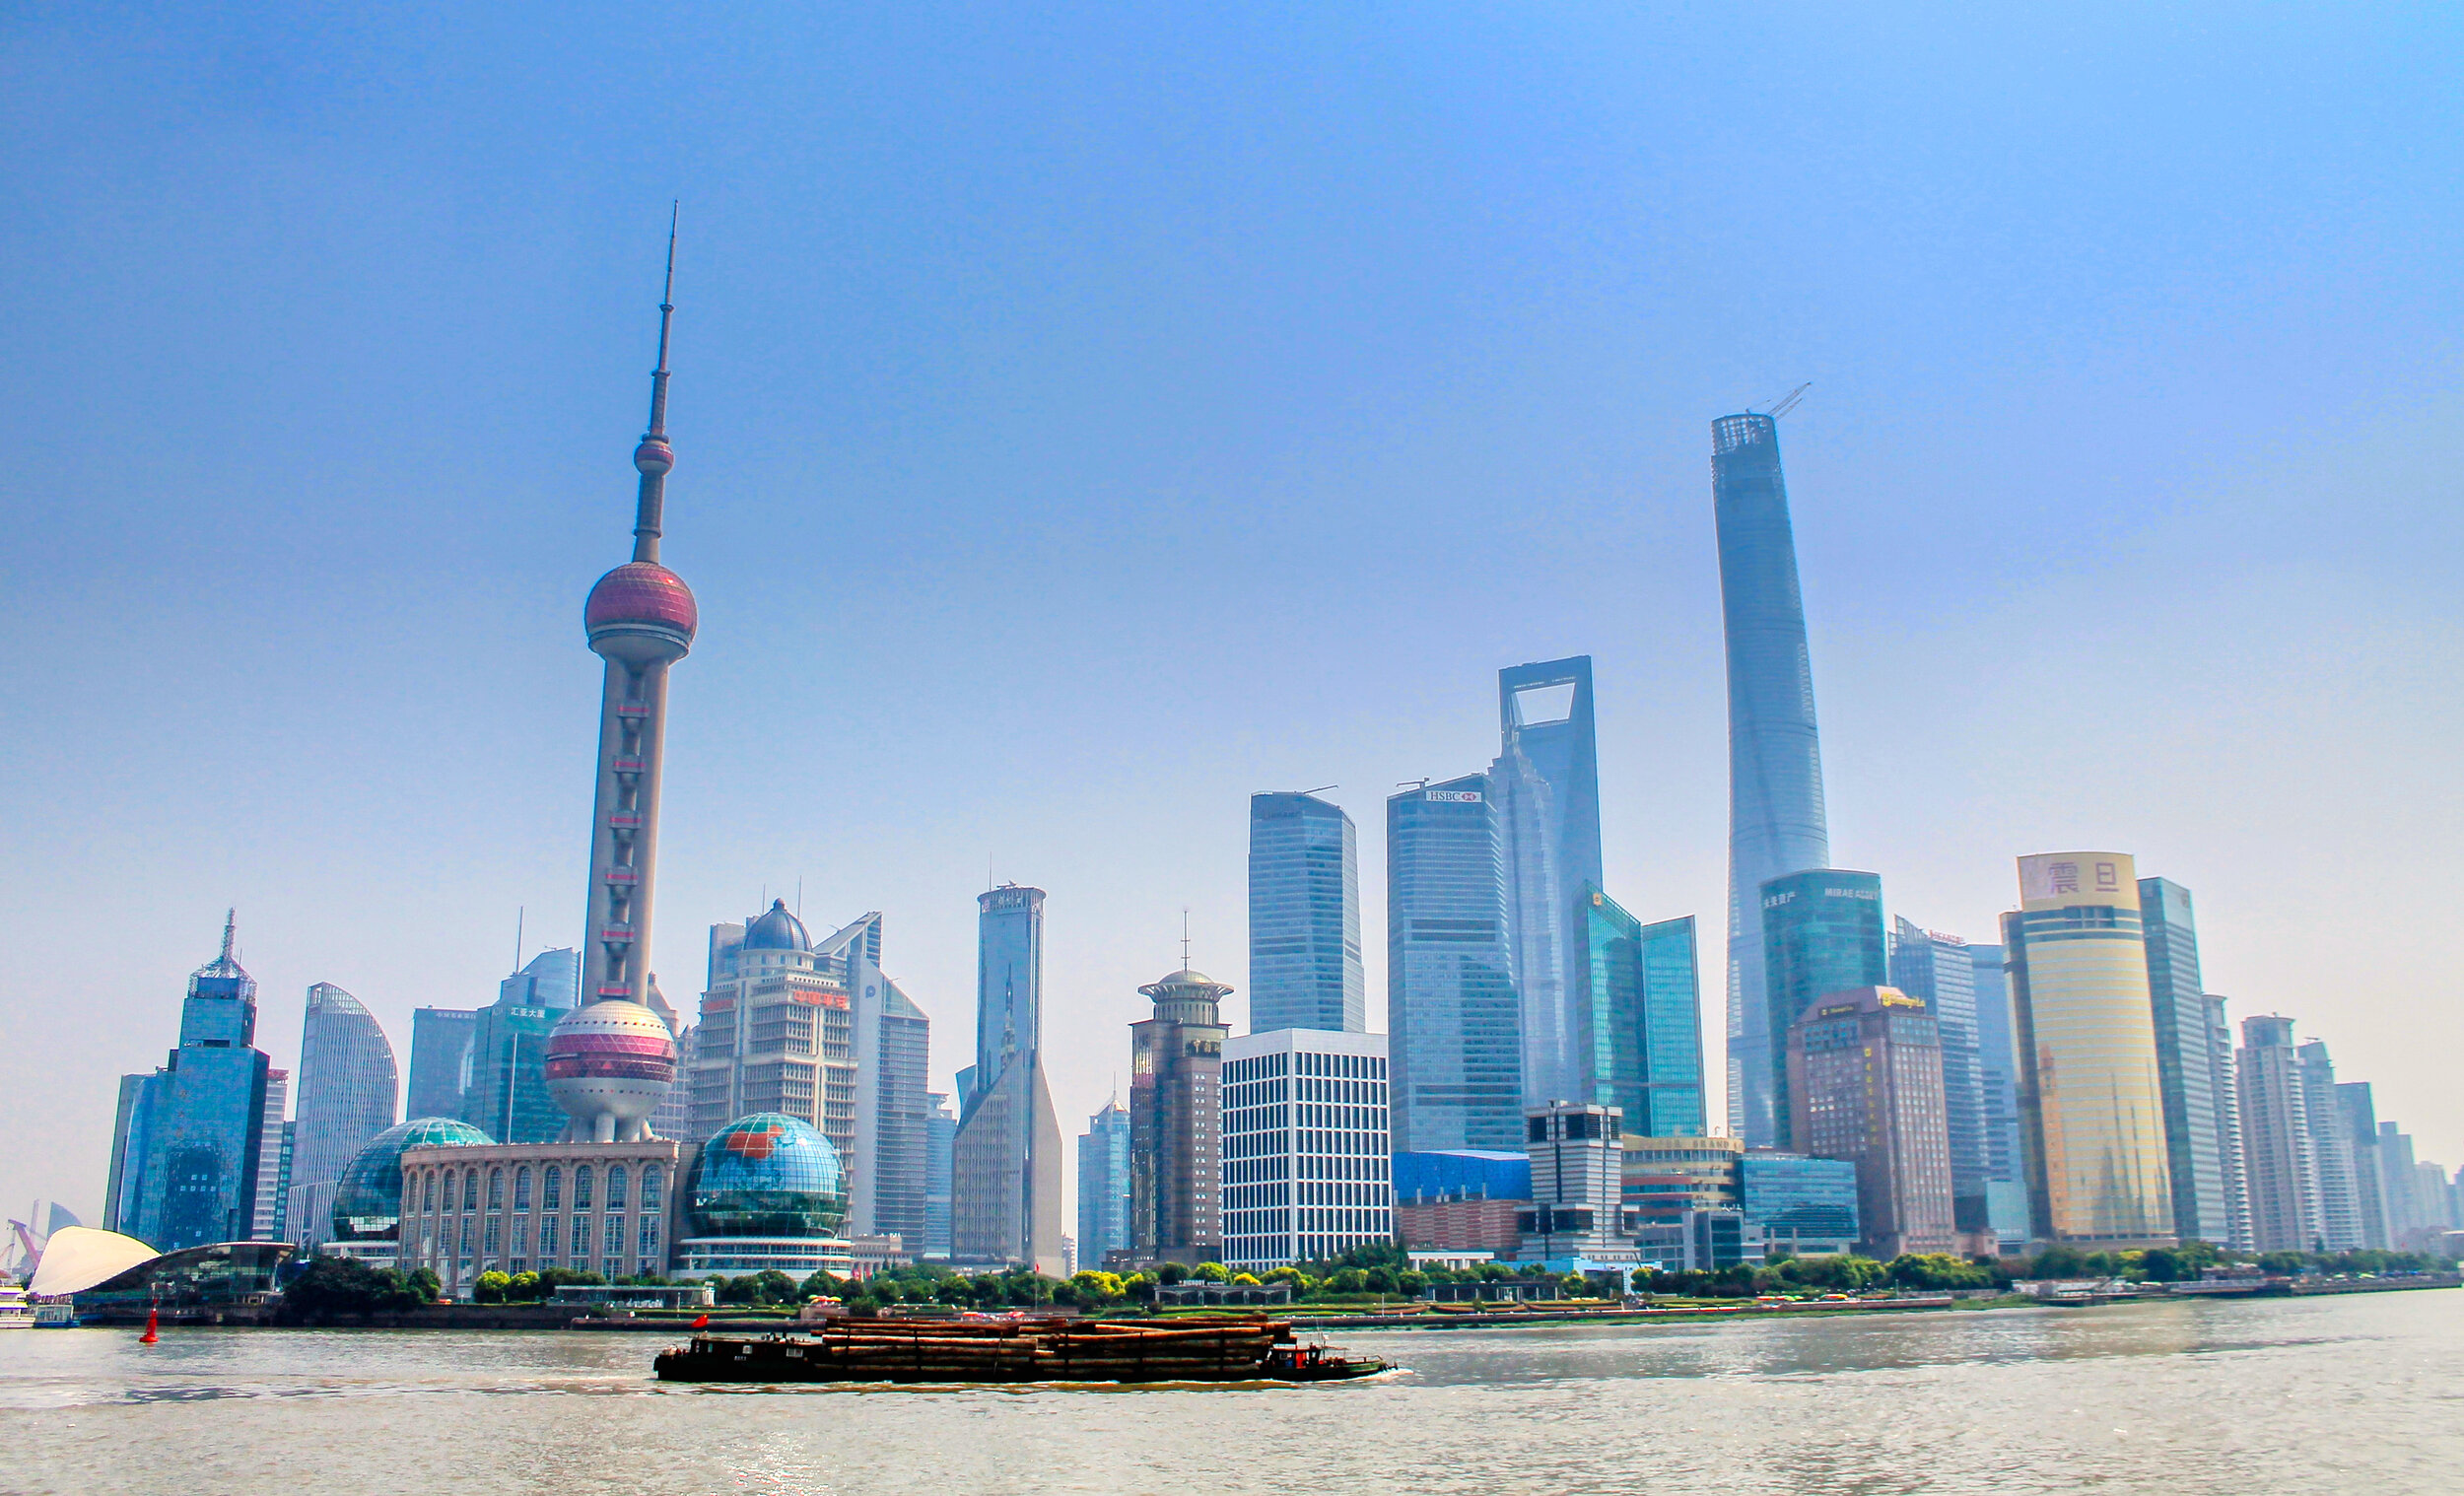   Shanghai Skyline from the Bund, Shanghai, China (ISO 100, 18 mm,  f /4.5, 1/4000 s)  